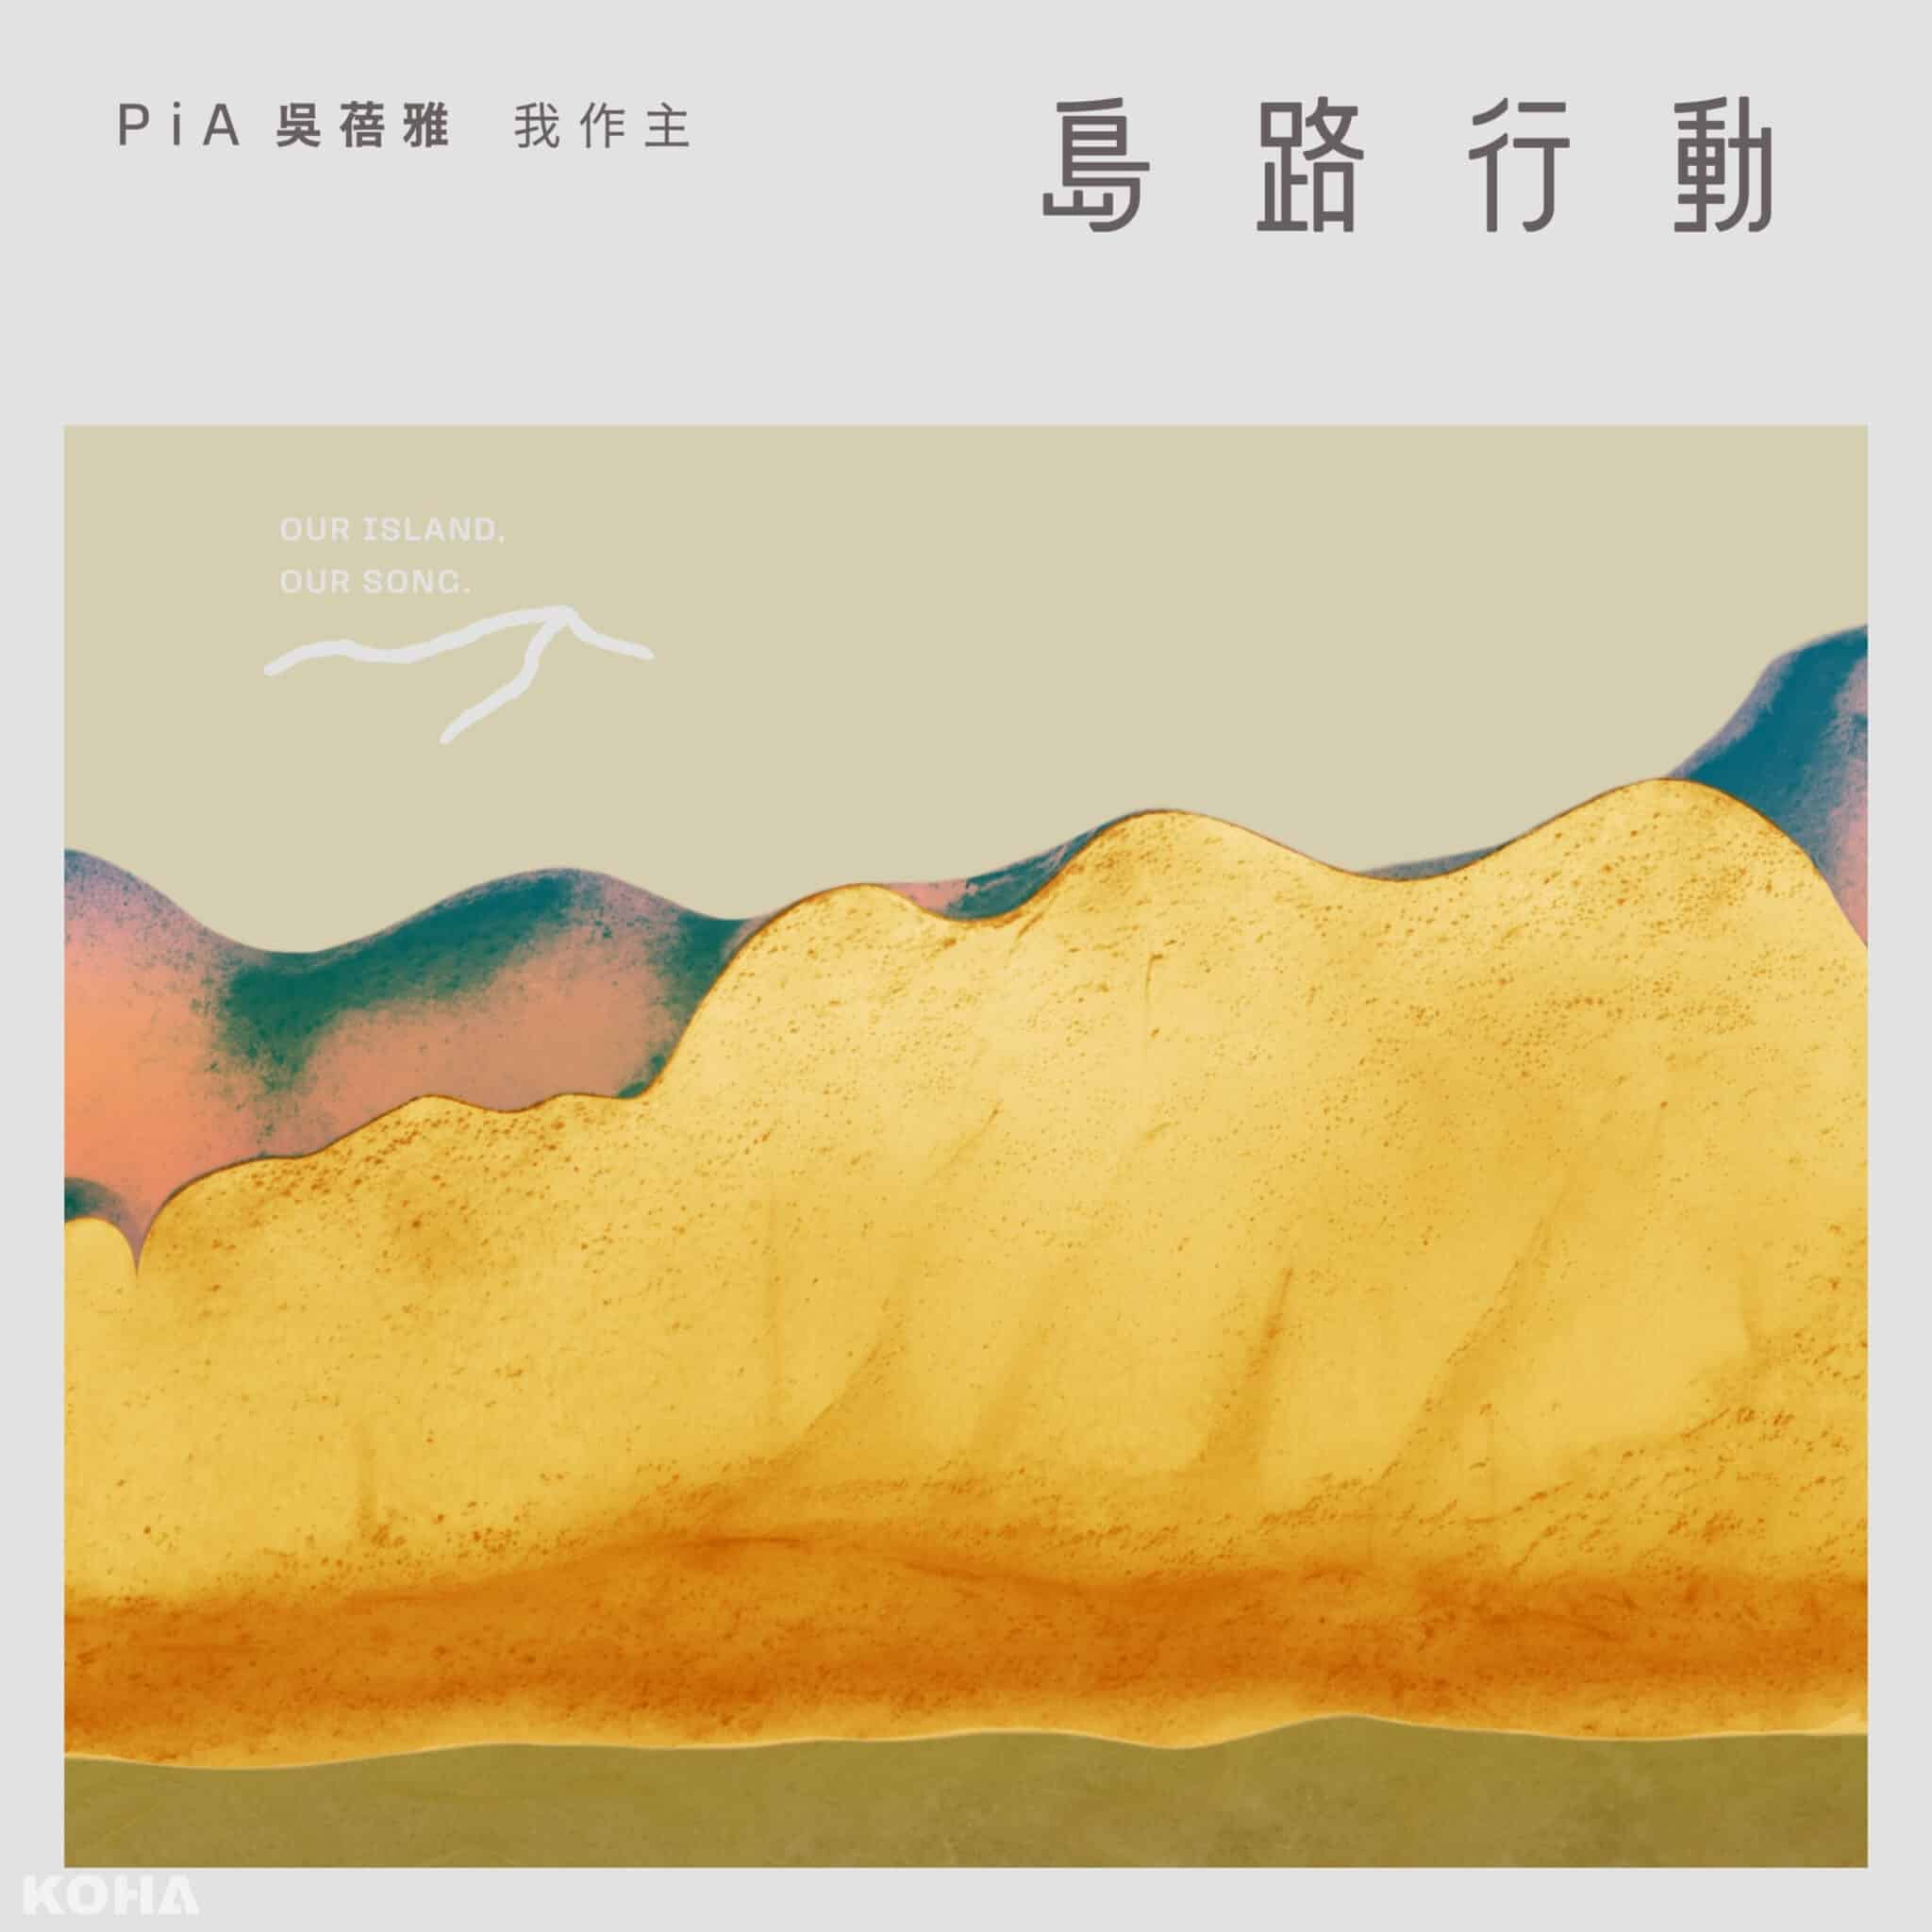 PiA吳蓓雅〈我作主〉單曲封面 scaled